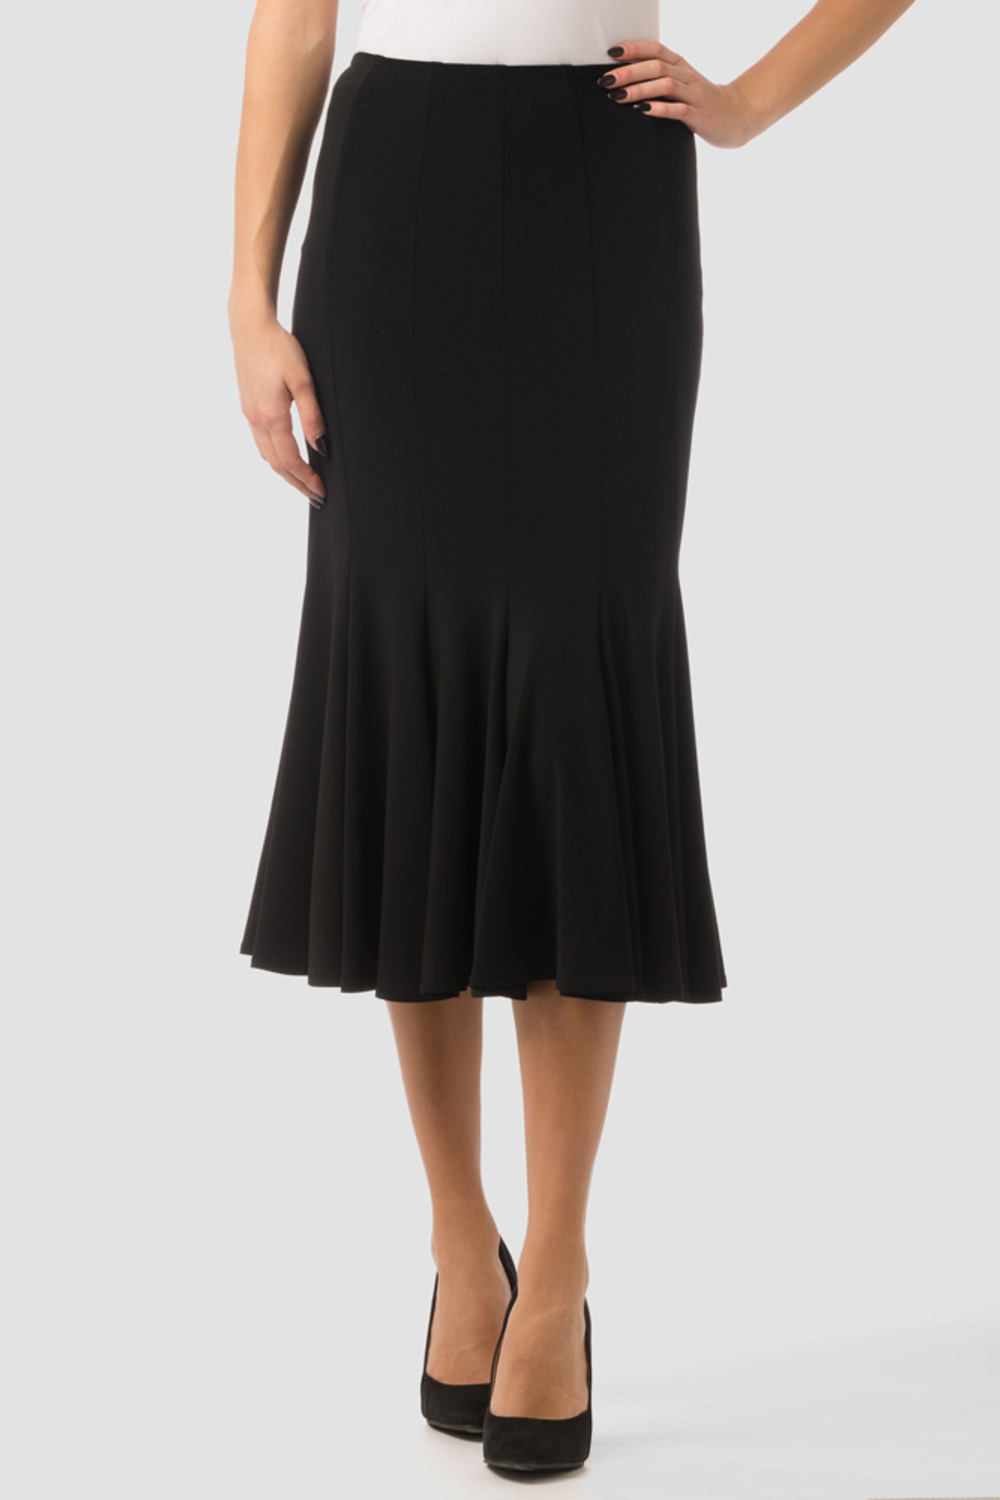 Joseph Ribkoff skirt style 163084. Black